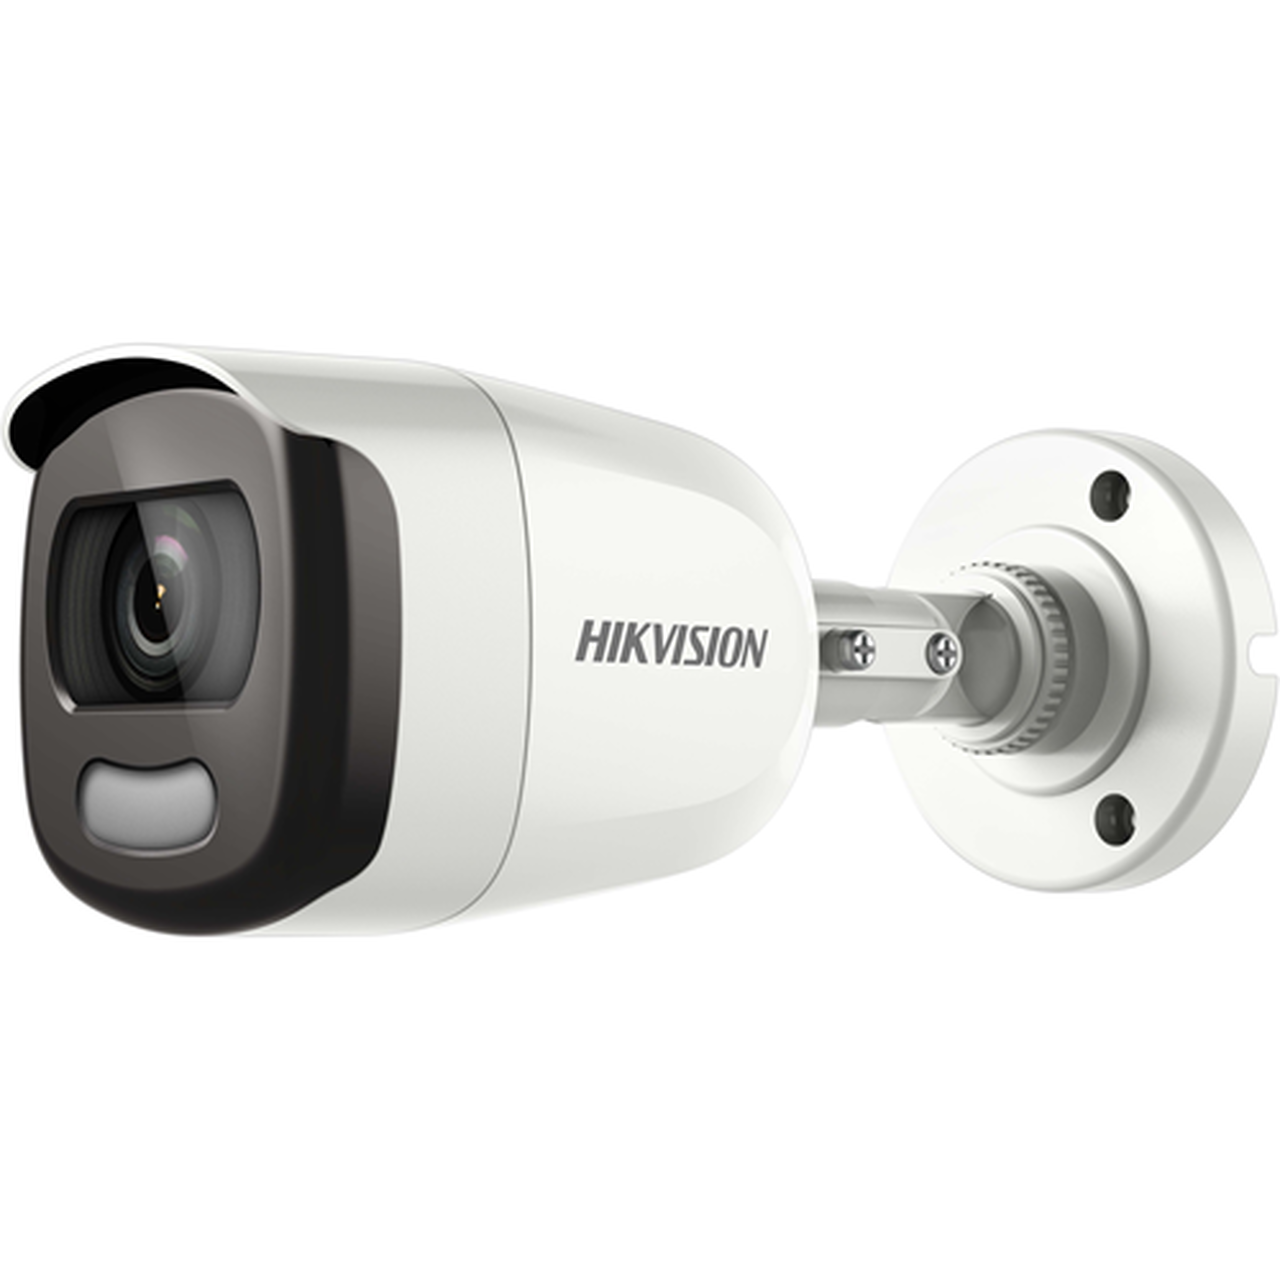 HIKVISION DS-2CE12HFT-F Turbo HD Camera